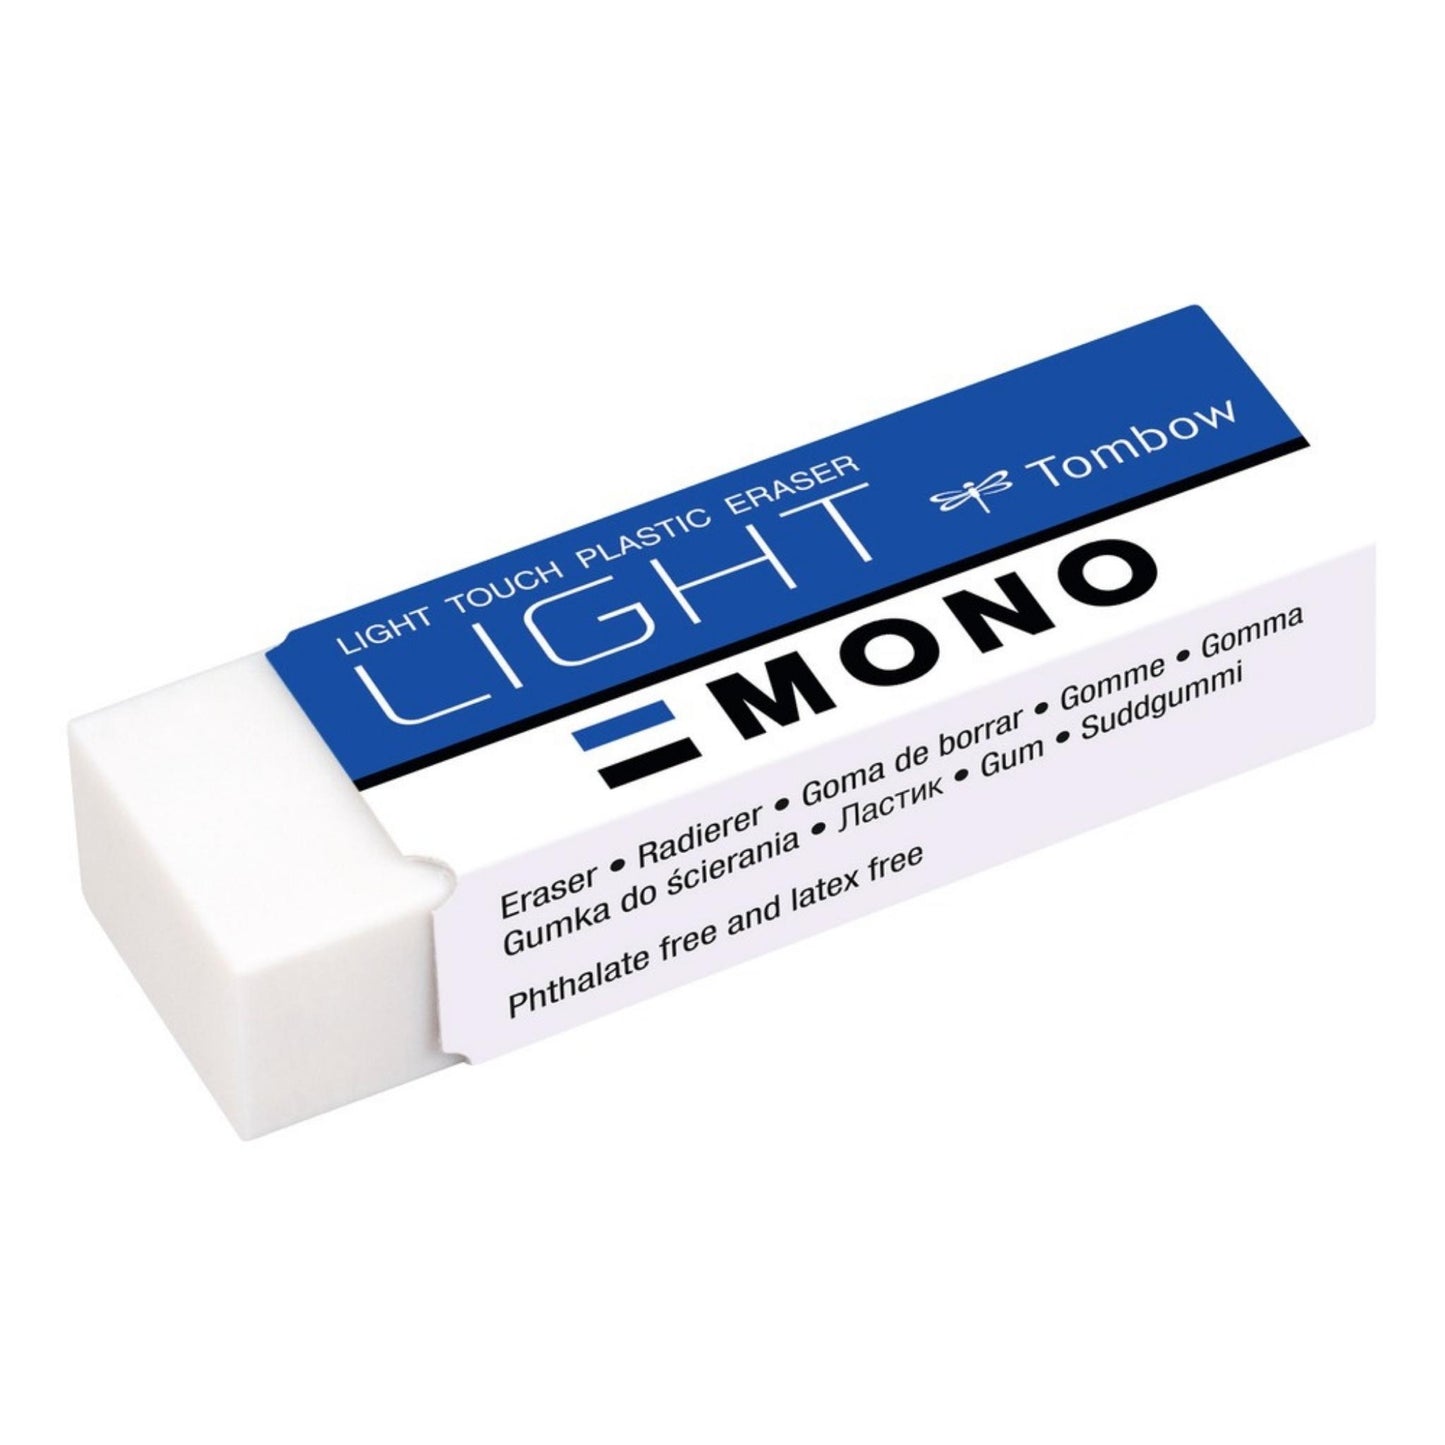 Tombow - Mono Light S - Plastik Radiergummi